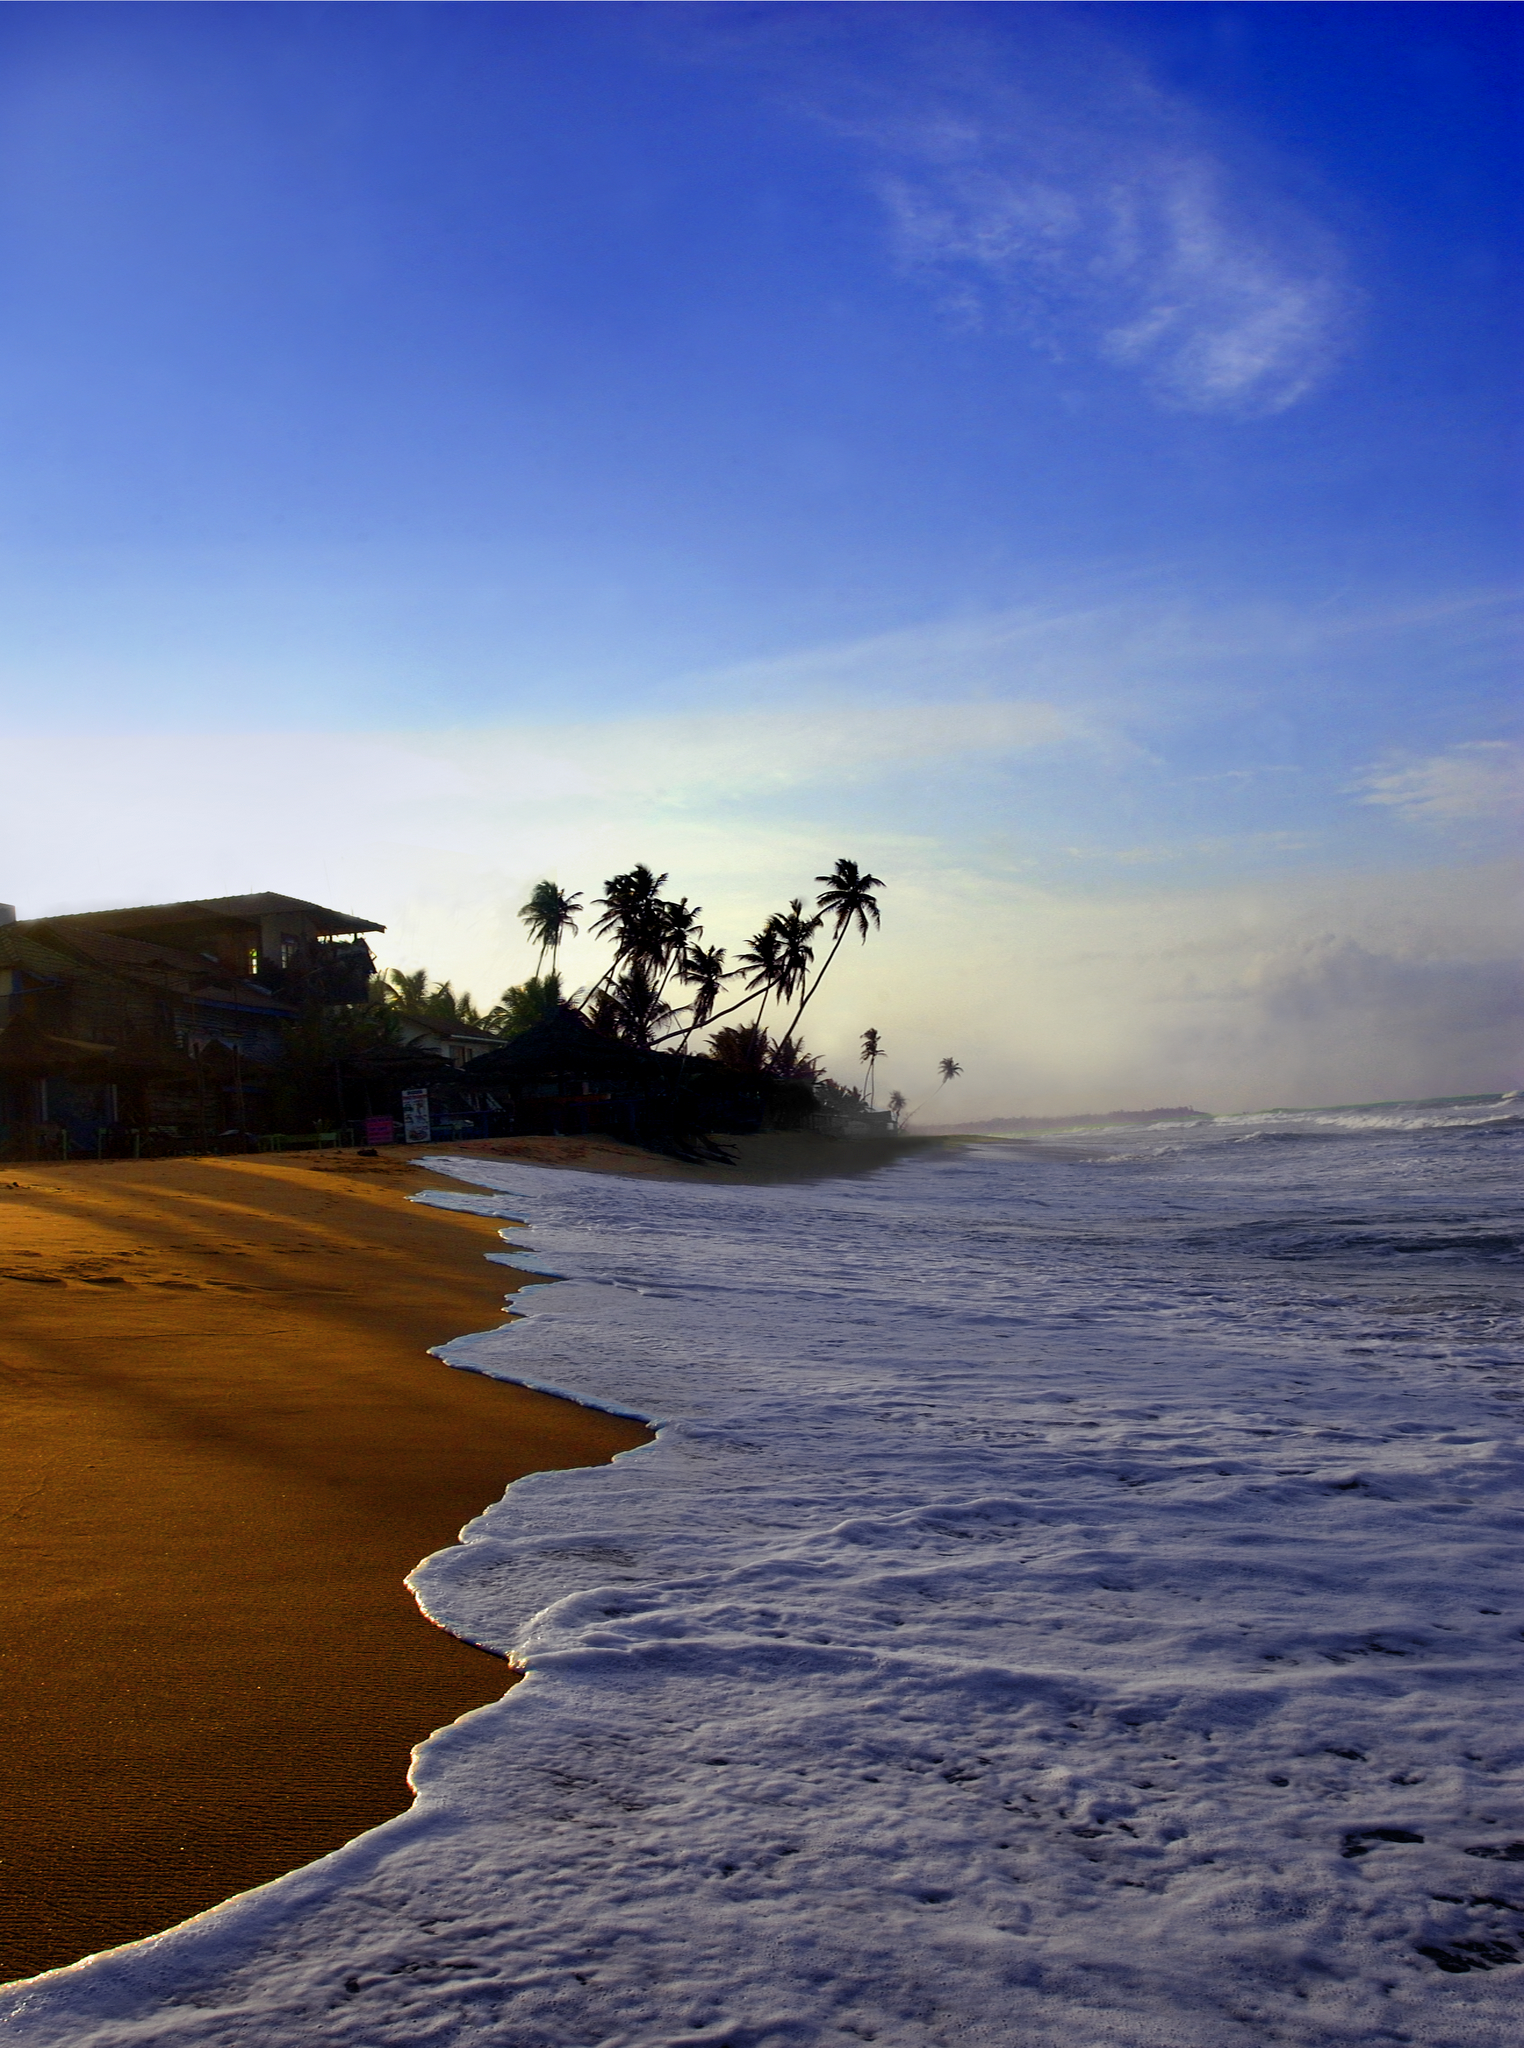 File:Morning view of Tangalla beach, Sri Lanka.jpg - Wikimedia Commons